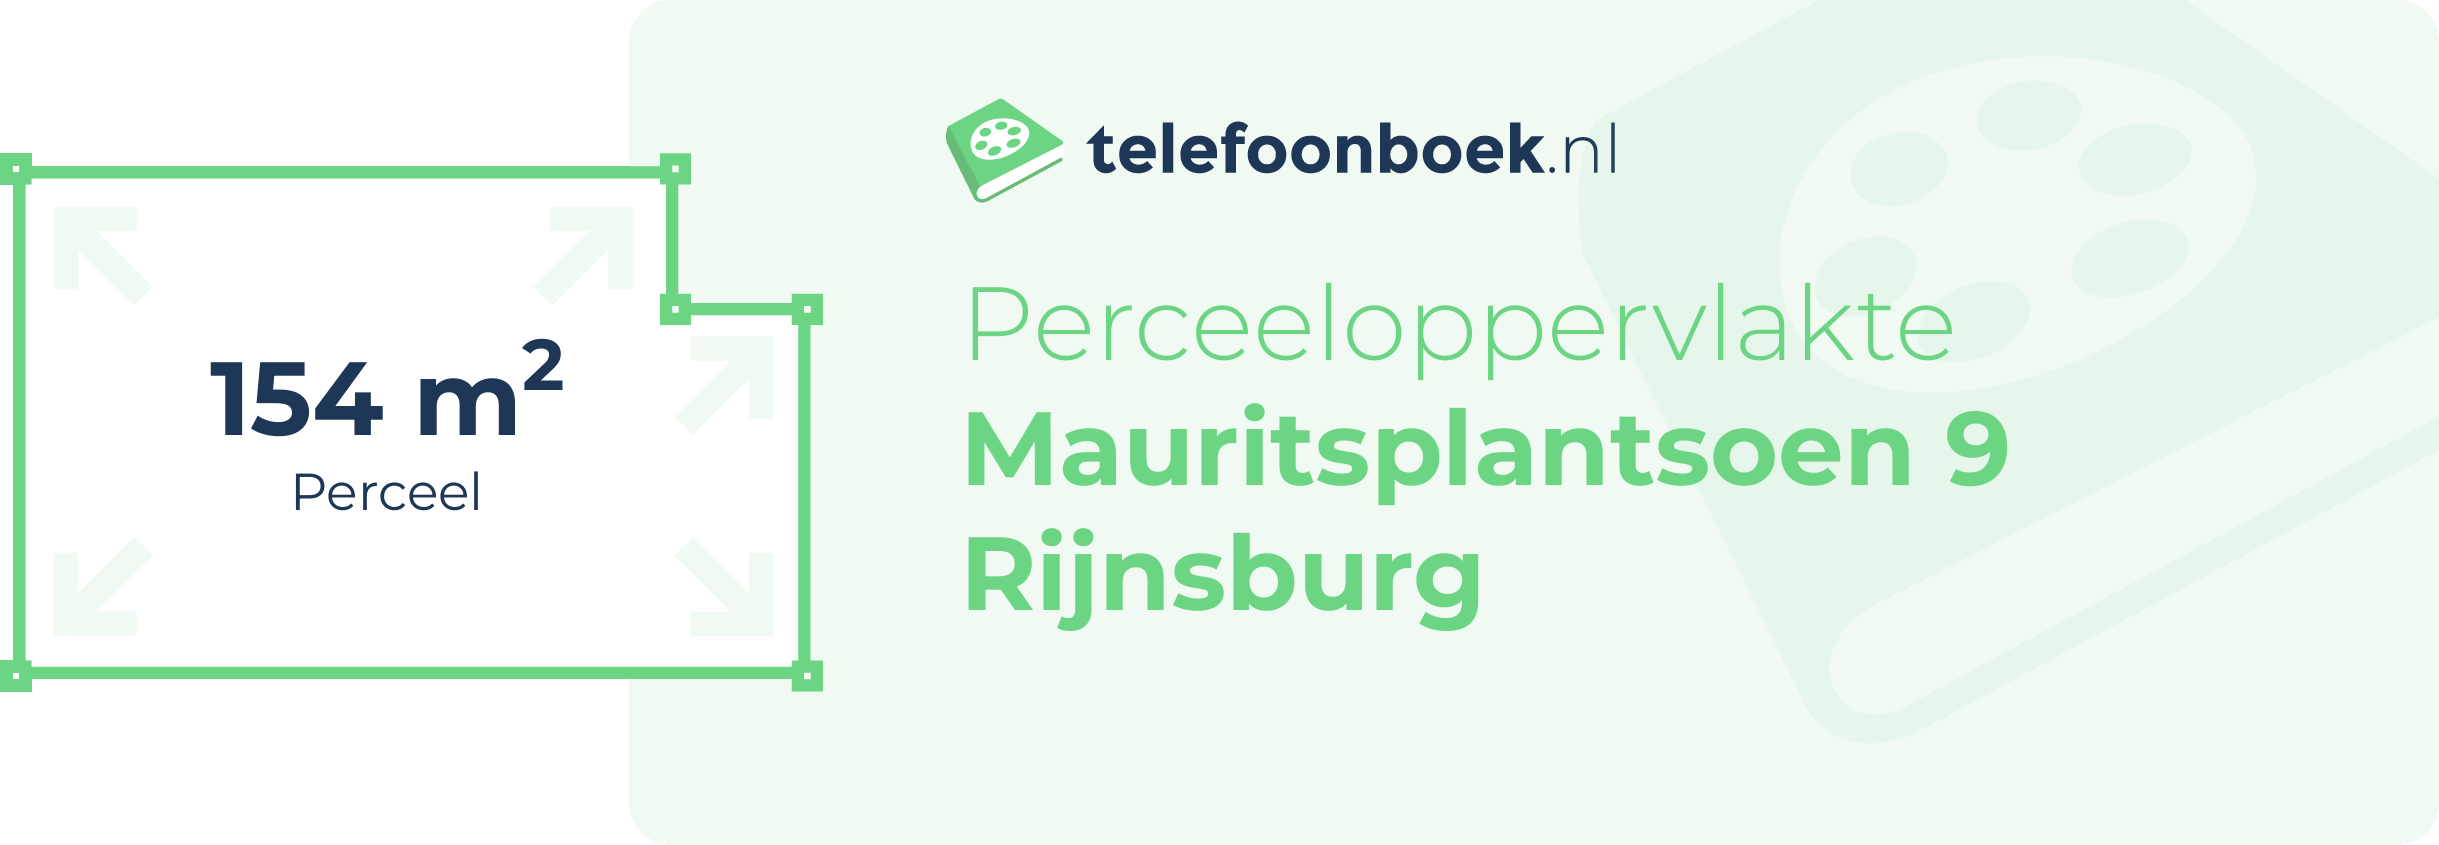 Perceeloppervlakte Mauritsplantsoen 9 Rijnsburg